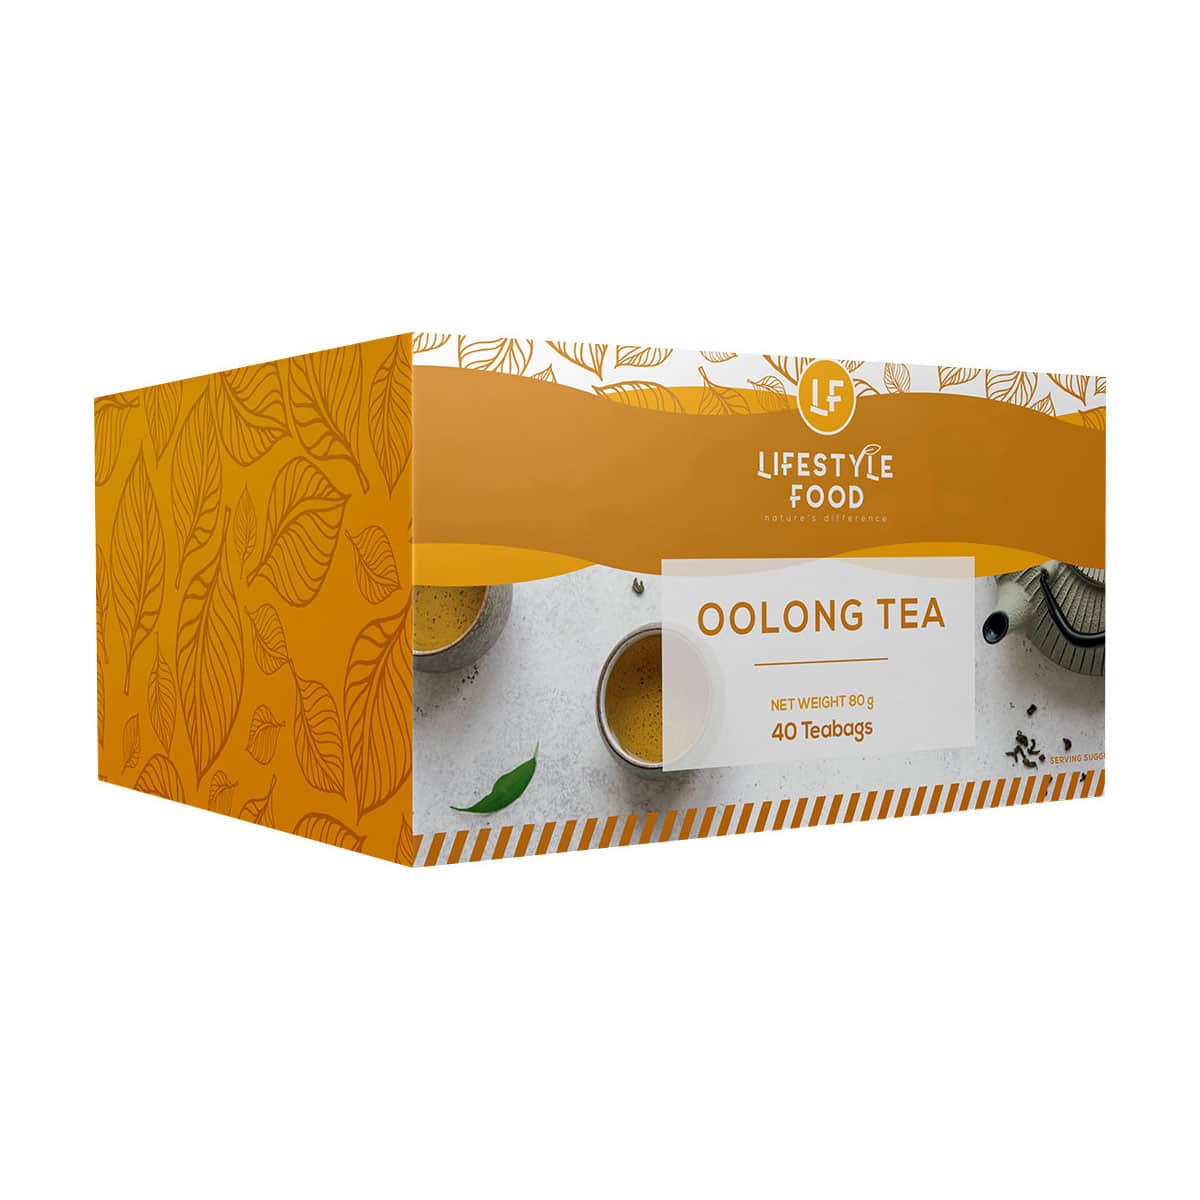 Lifestyle Food Oolong Tea Value Pack - 40 Teabags